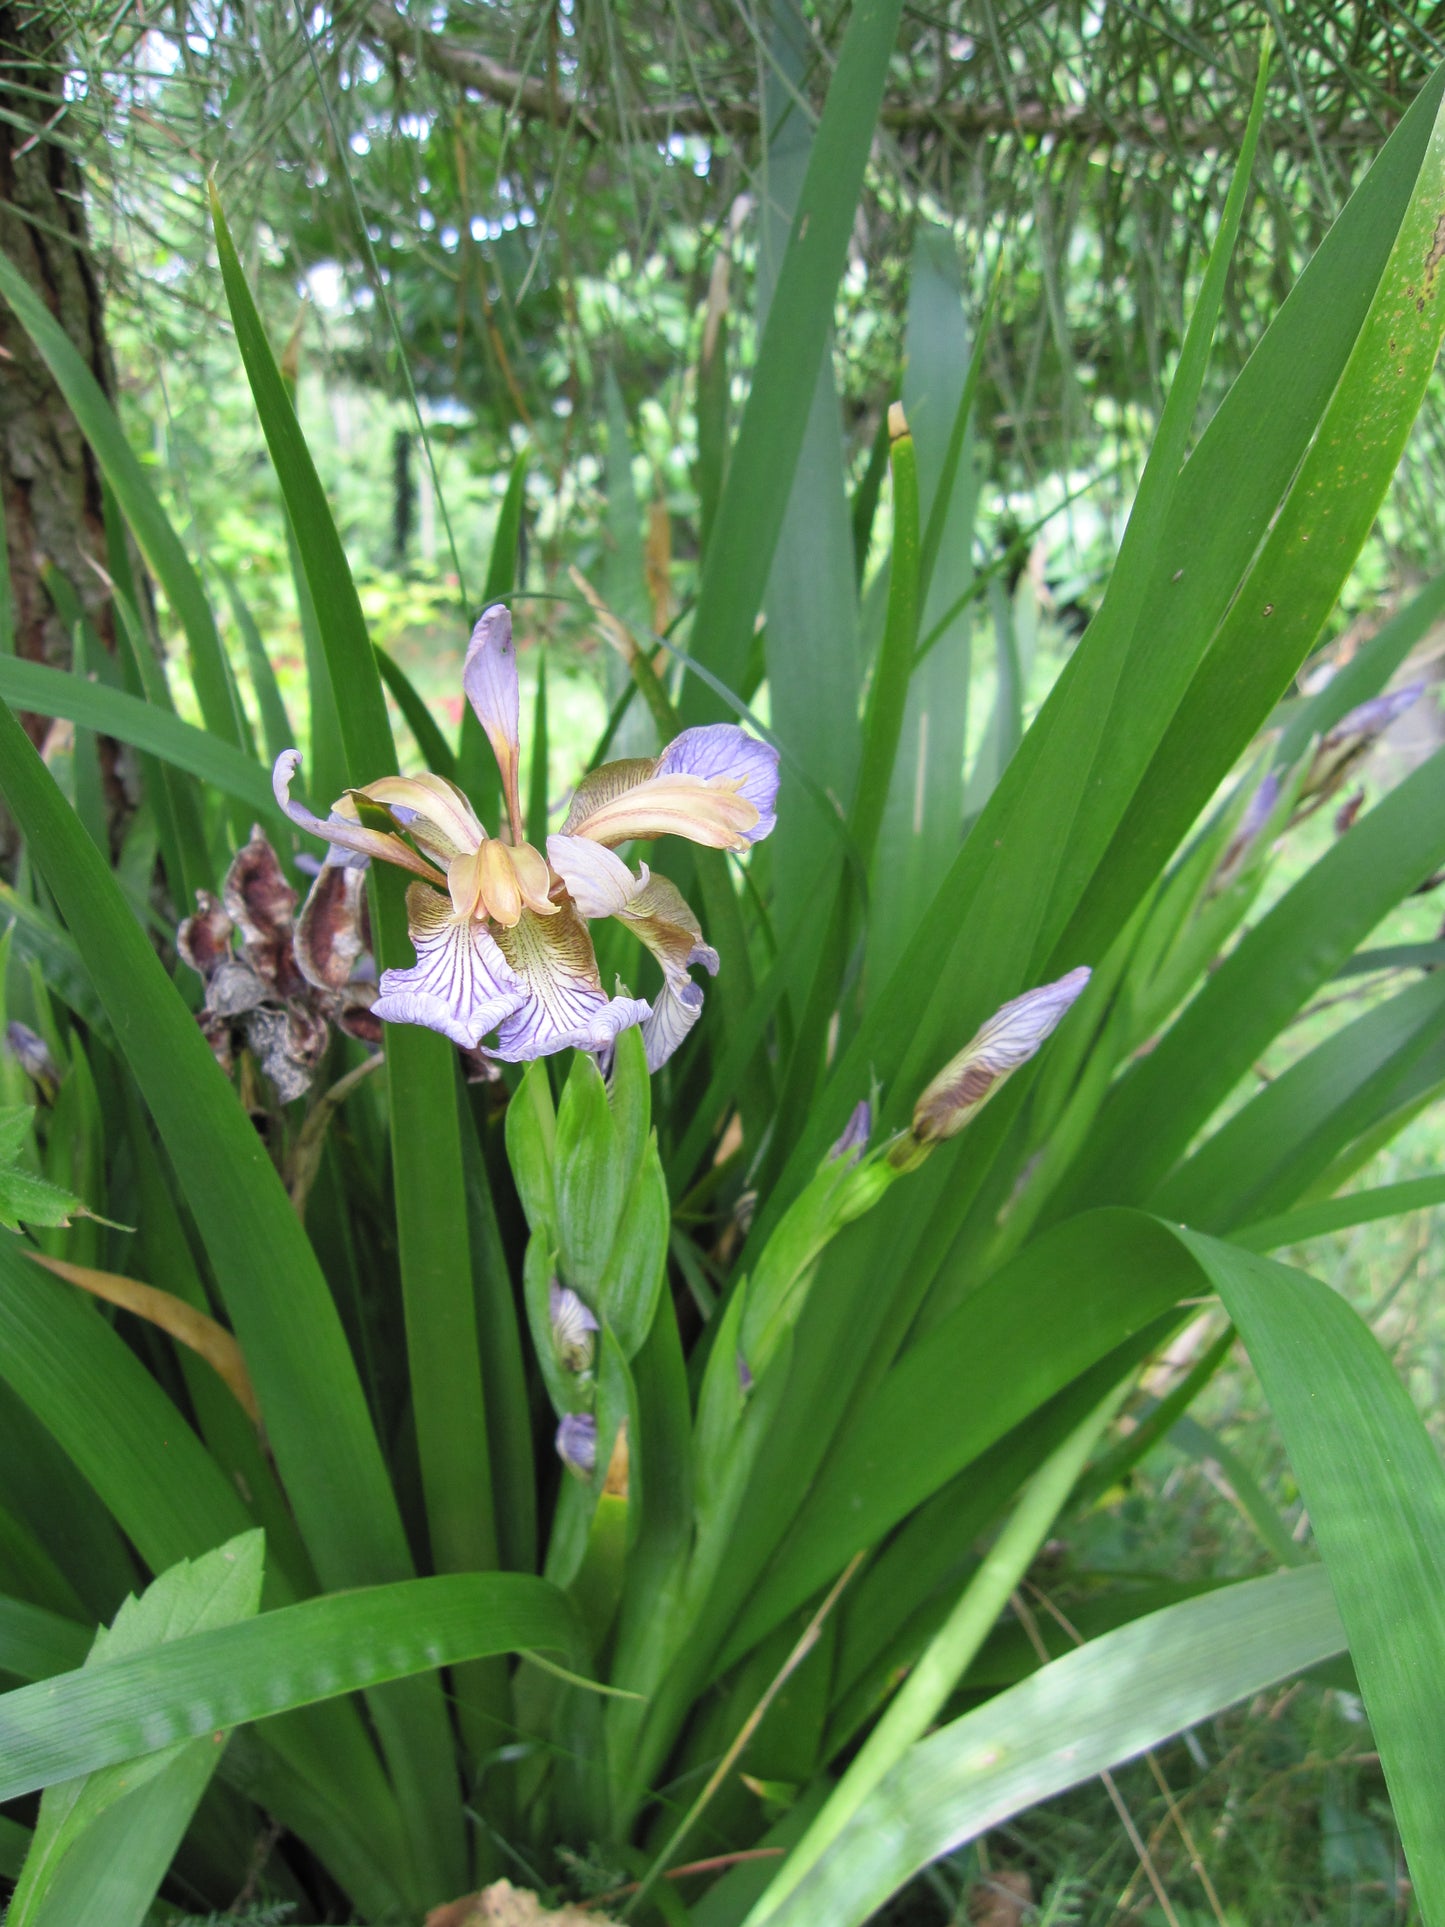 Gladdon Gladwin Iris Roast Beef Iris (Iris foetidissima)